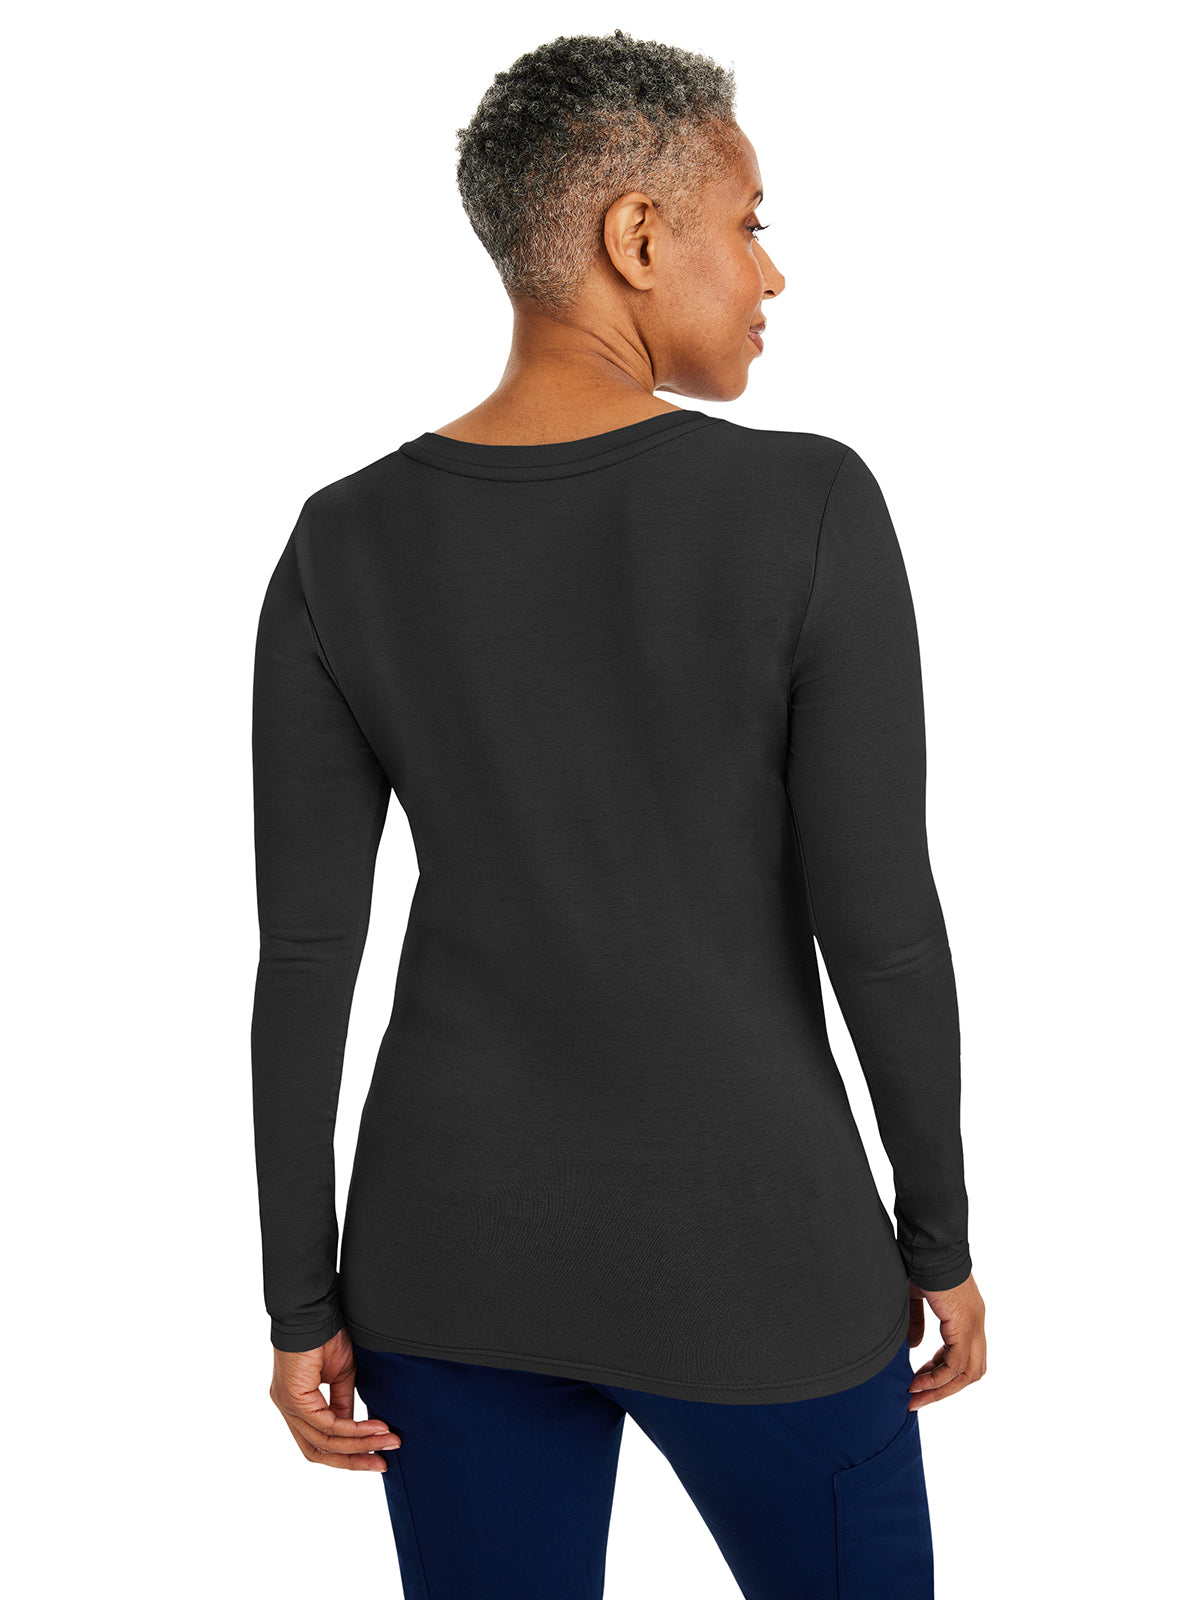 Women's Long Sleeve Underscrub Tee - 5047 - Black